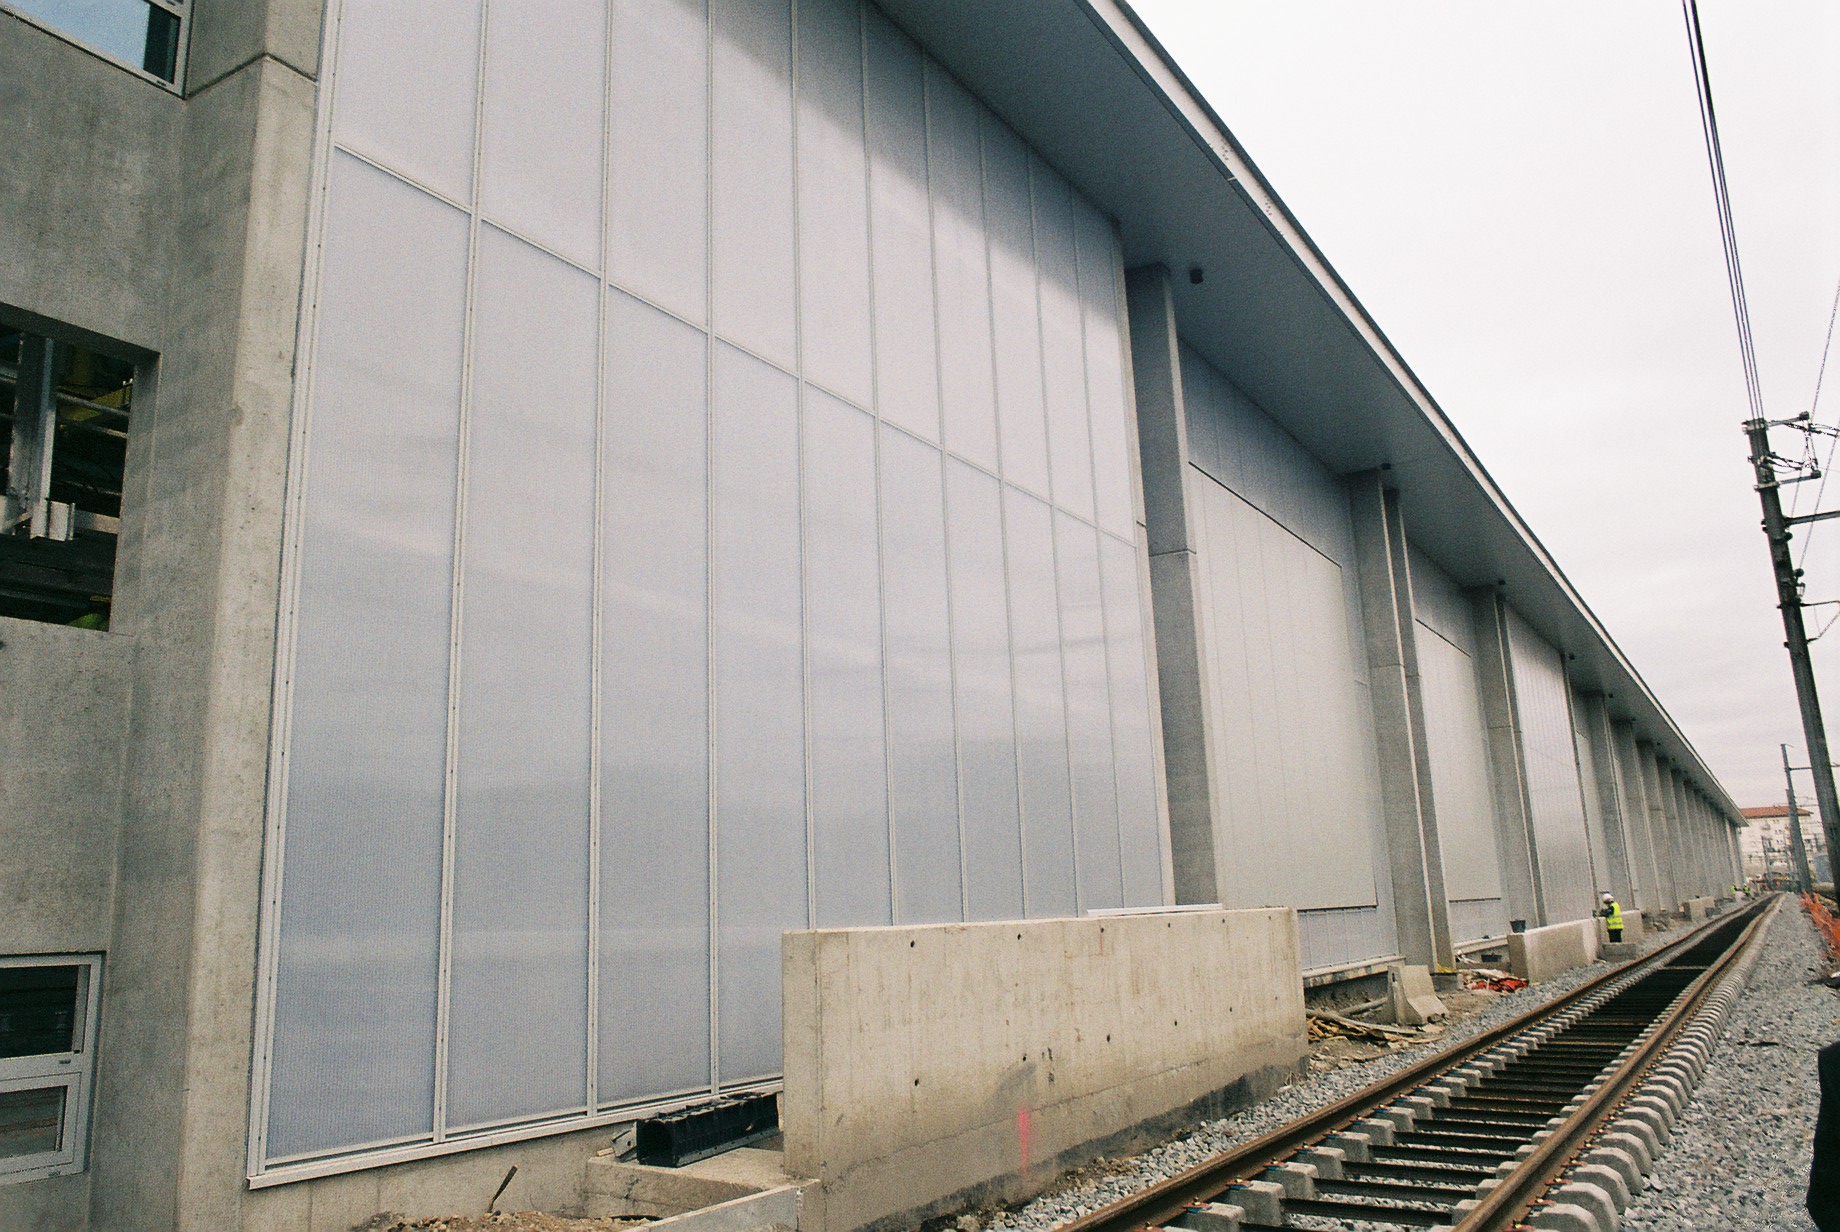 TVG Train Maintenance Facility in France